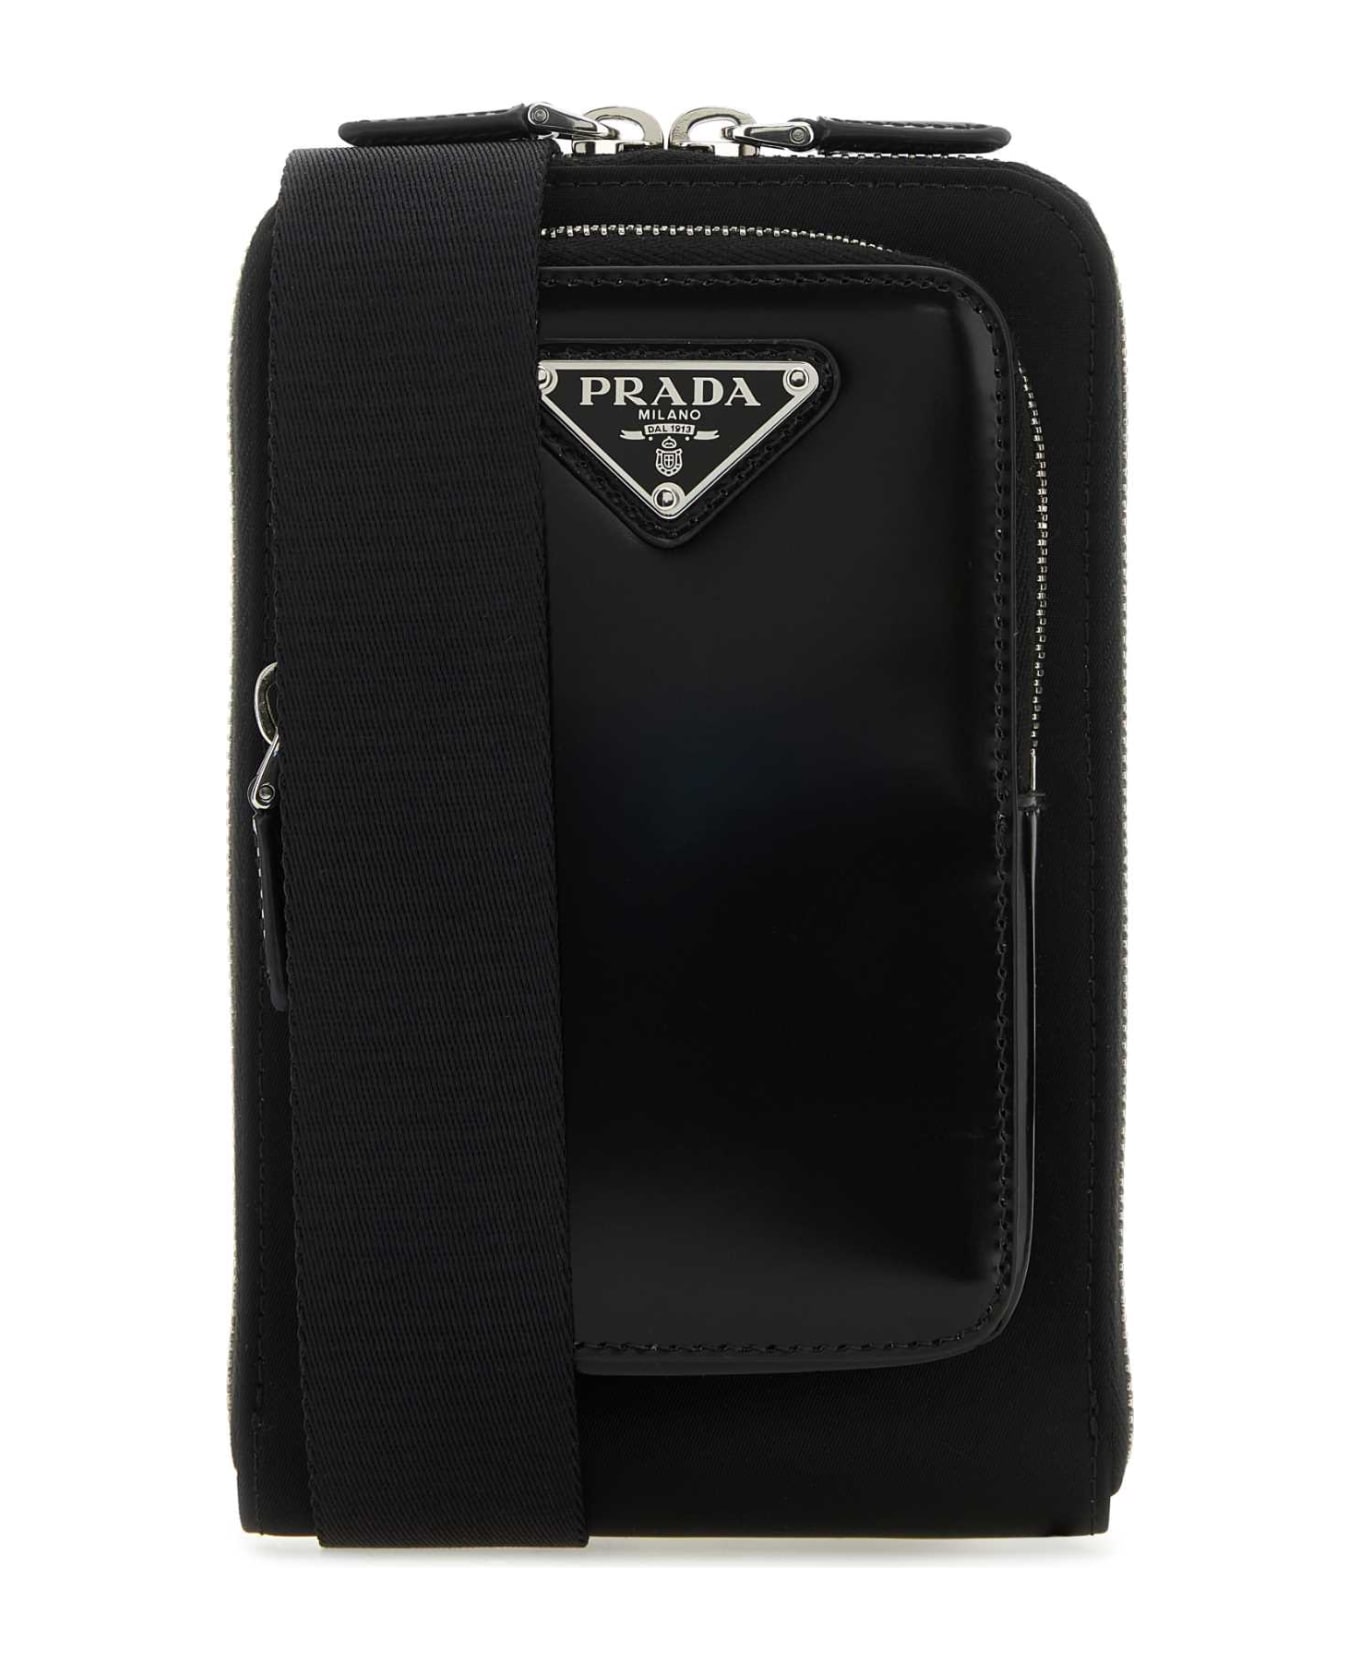 Prada Black Nylon And Leather Phone Case - NERO